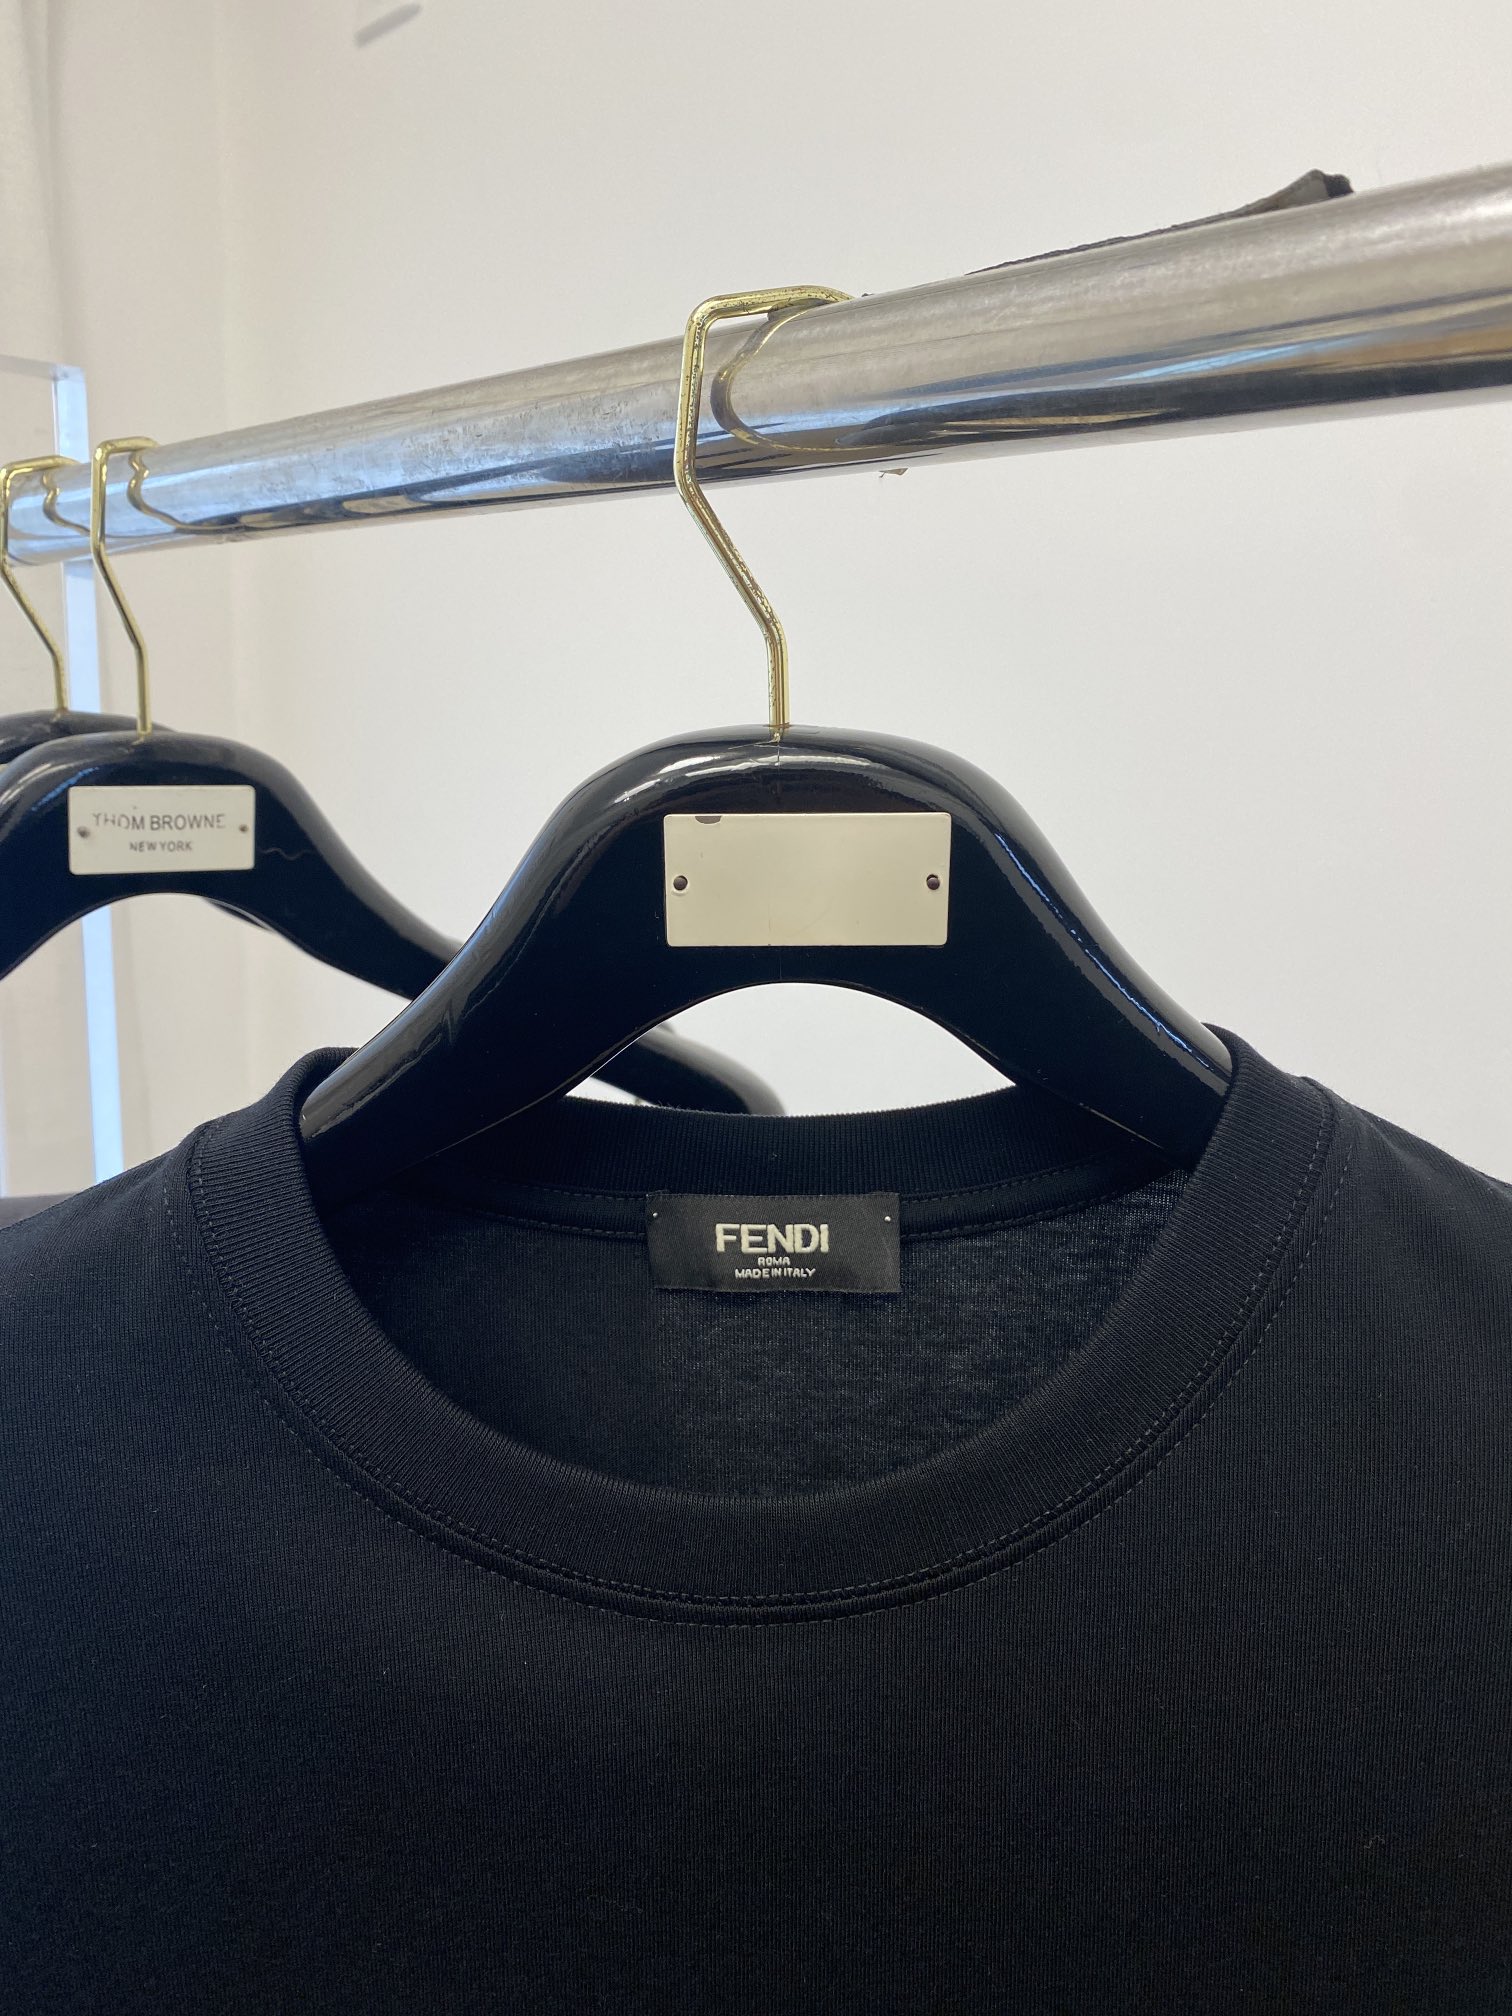 fendi t シャツ アウトレットＮ級品 トップス 半袖 純綿 ファッション 人気定番 ロゴプリント 新品 柔らかい ブラック_2